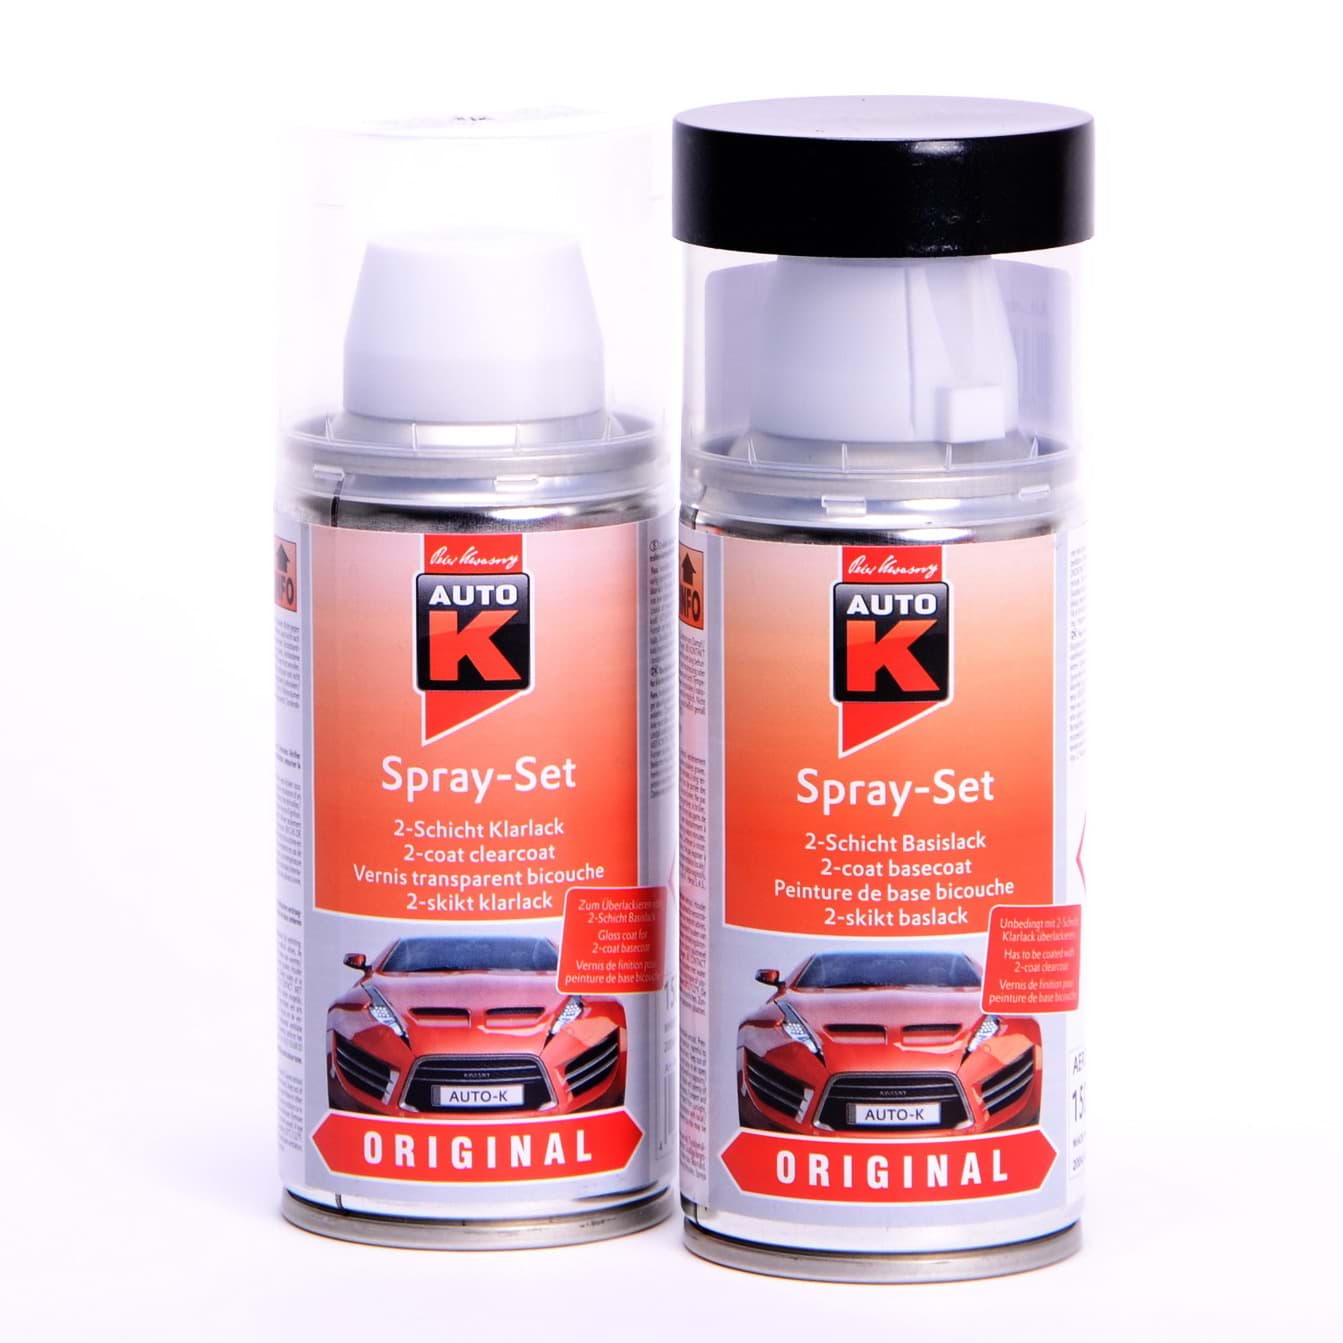 Afbeelding van Auto-K Spray-Set Autolack für Volkswagen, VW, Audi LK7Y Sturmgrau met, Storm Grey met 20752